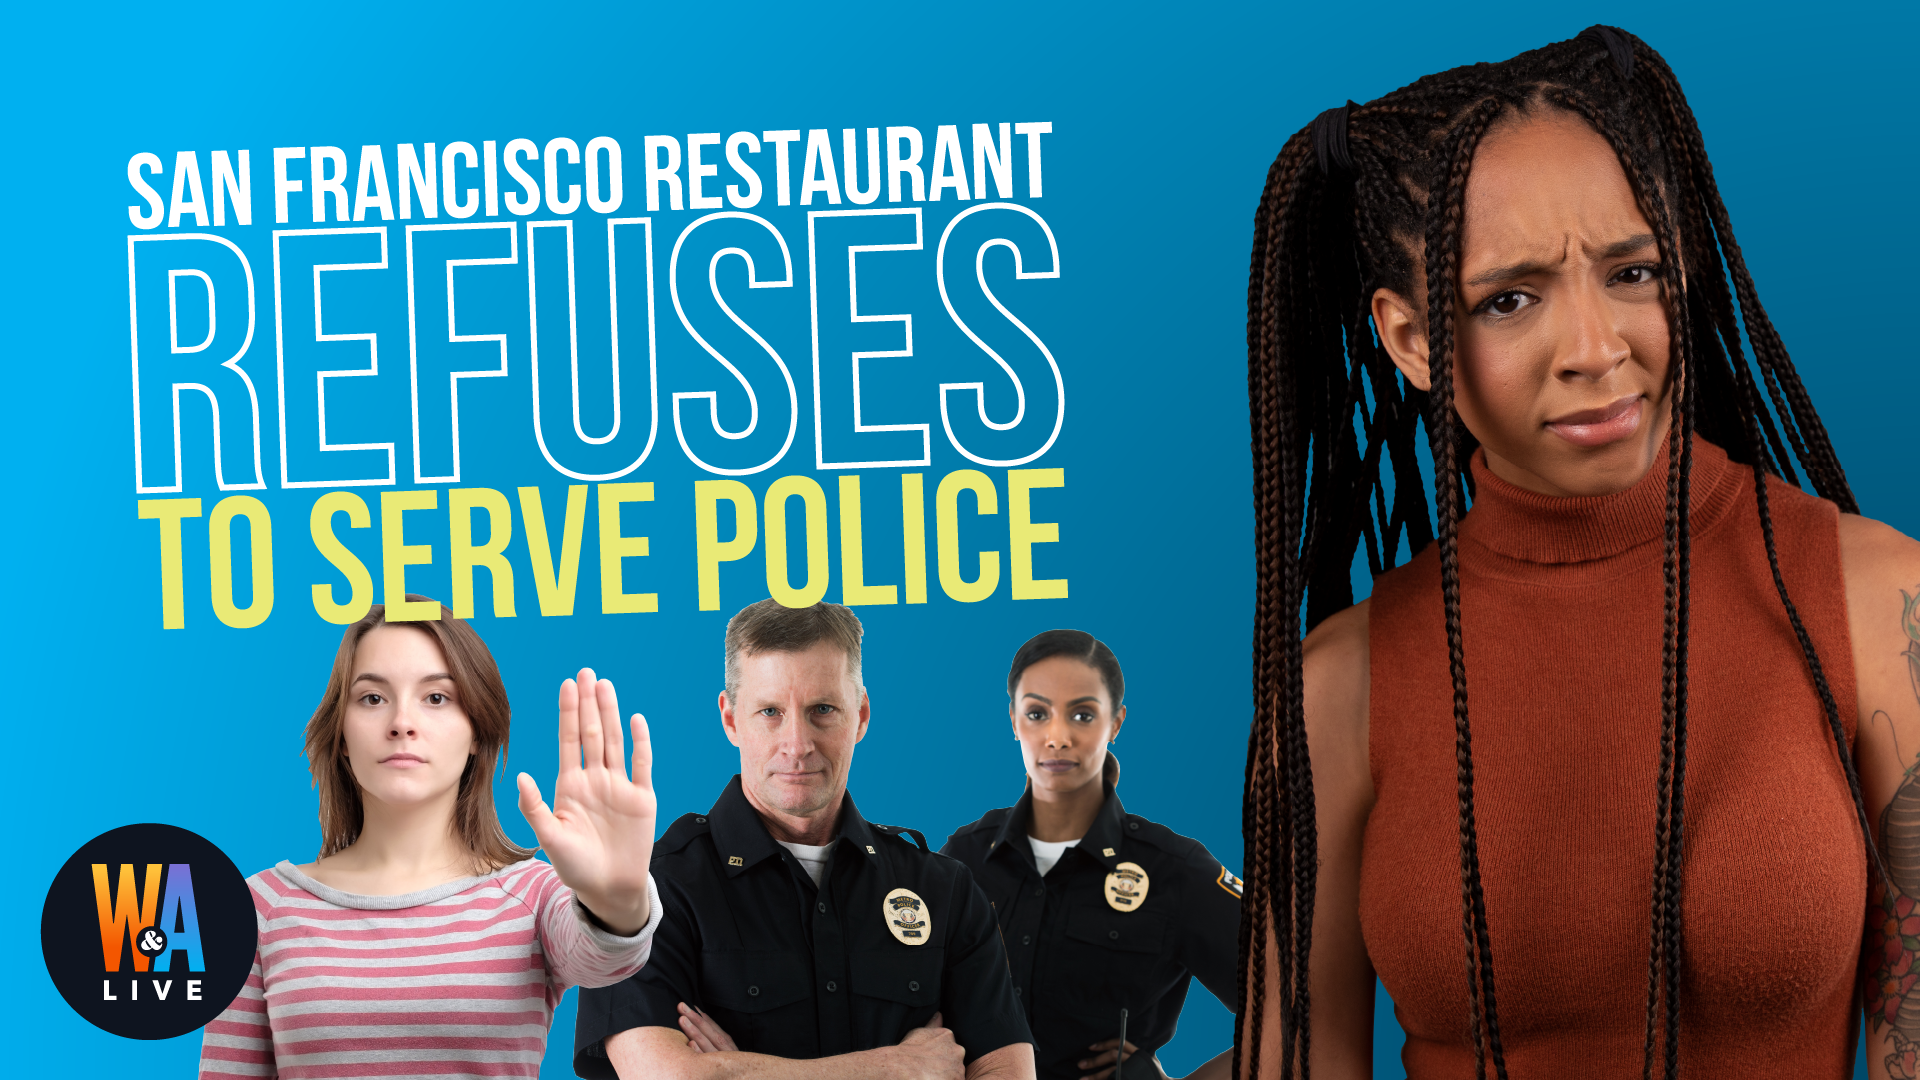 San Francisco Restaurant Refuses to Serve Police